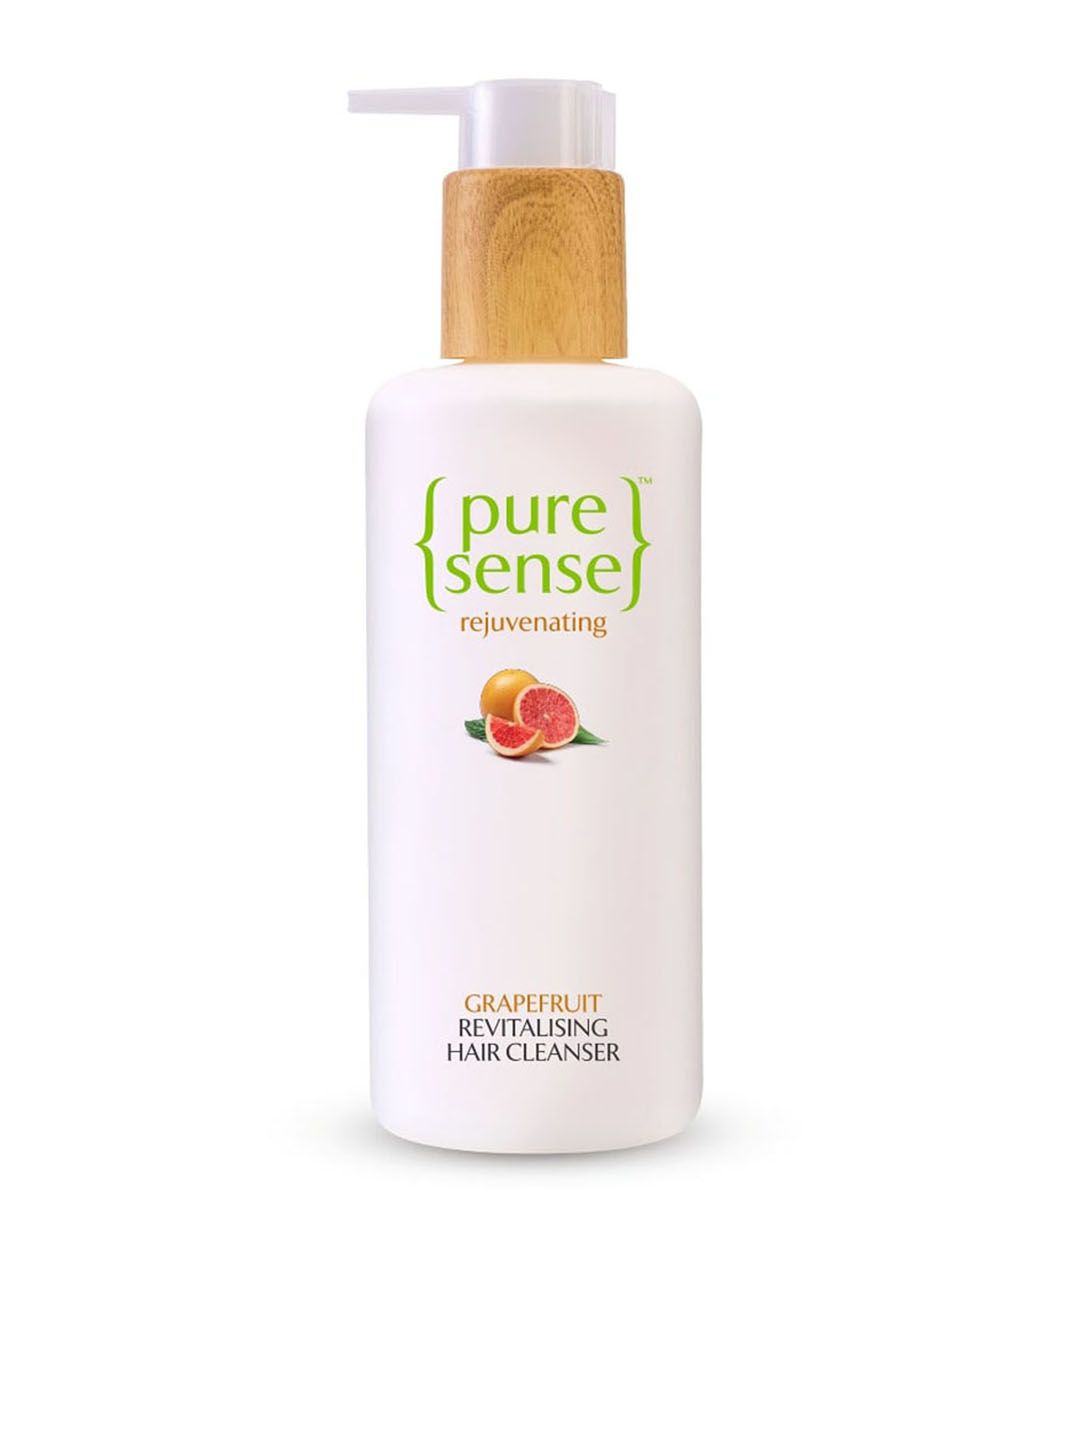 Pure Sense Vitamin C Rich Grapefruit Revitalising & Volumizing Hair Cleanser - 200 ml Price in India